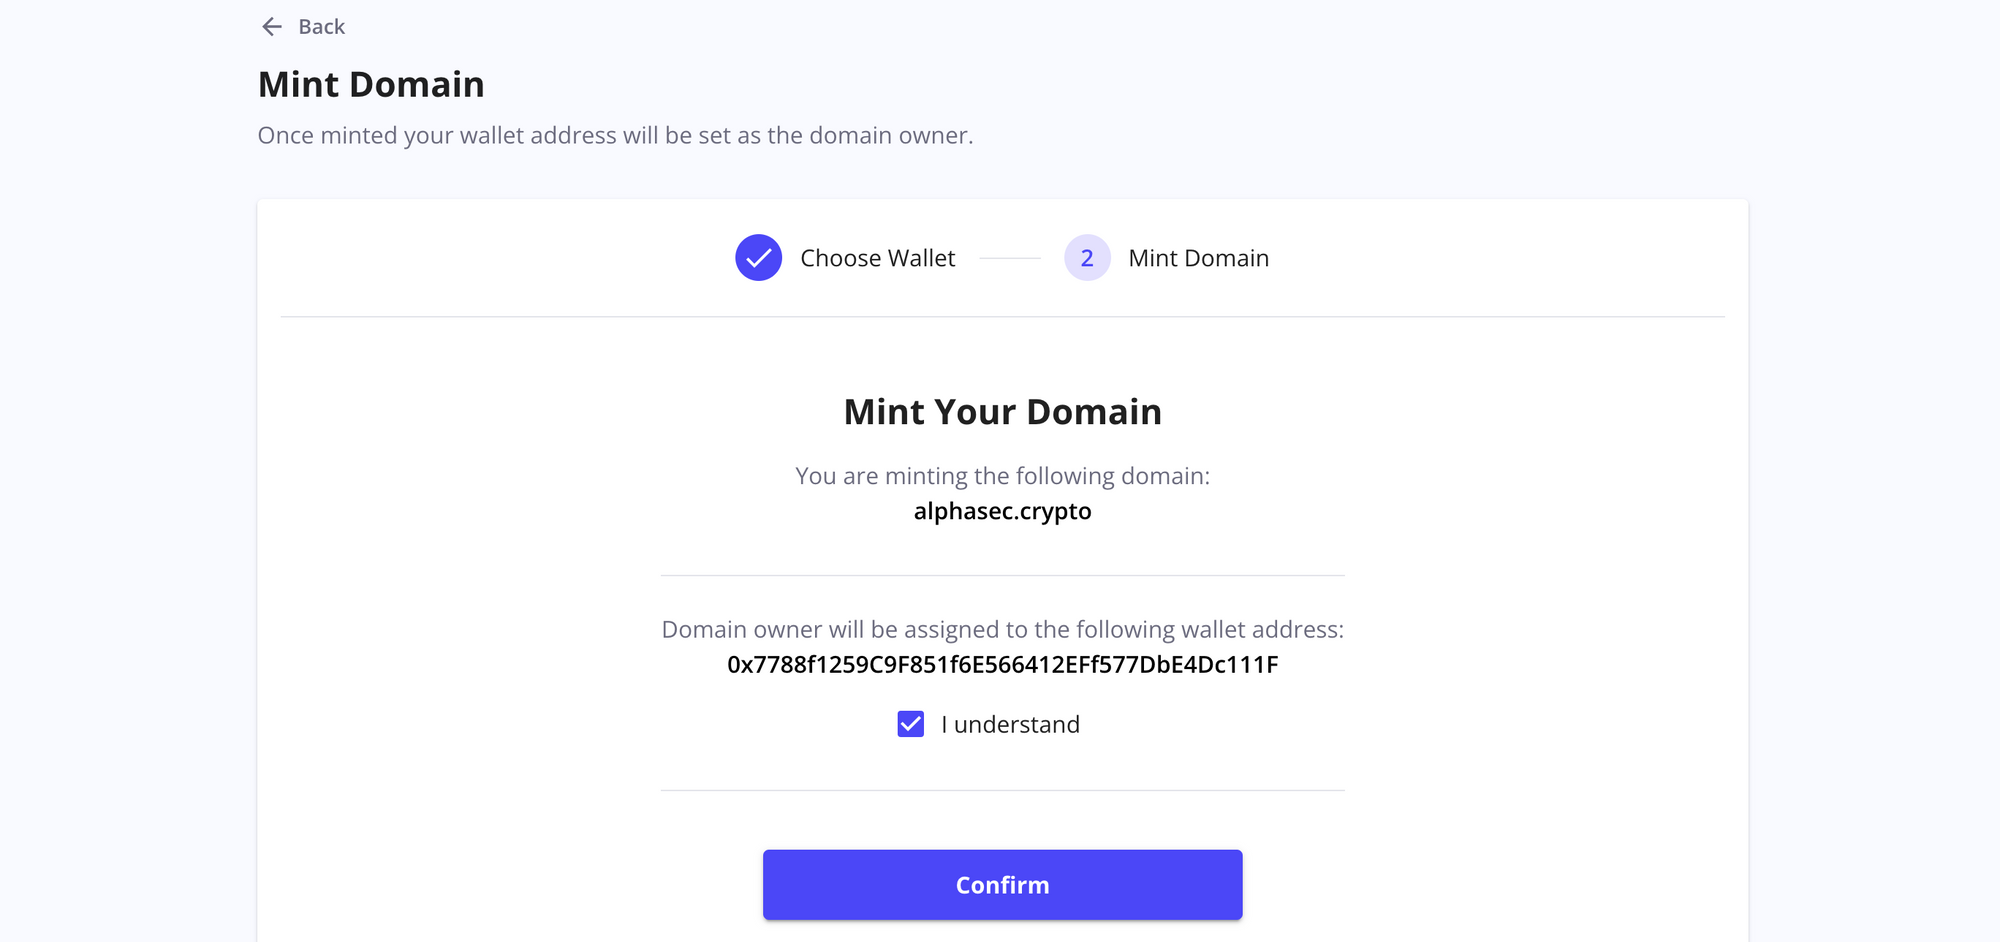 Mint domain - confirmation